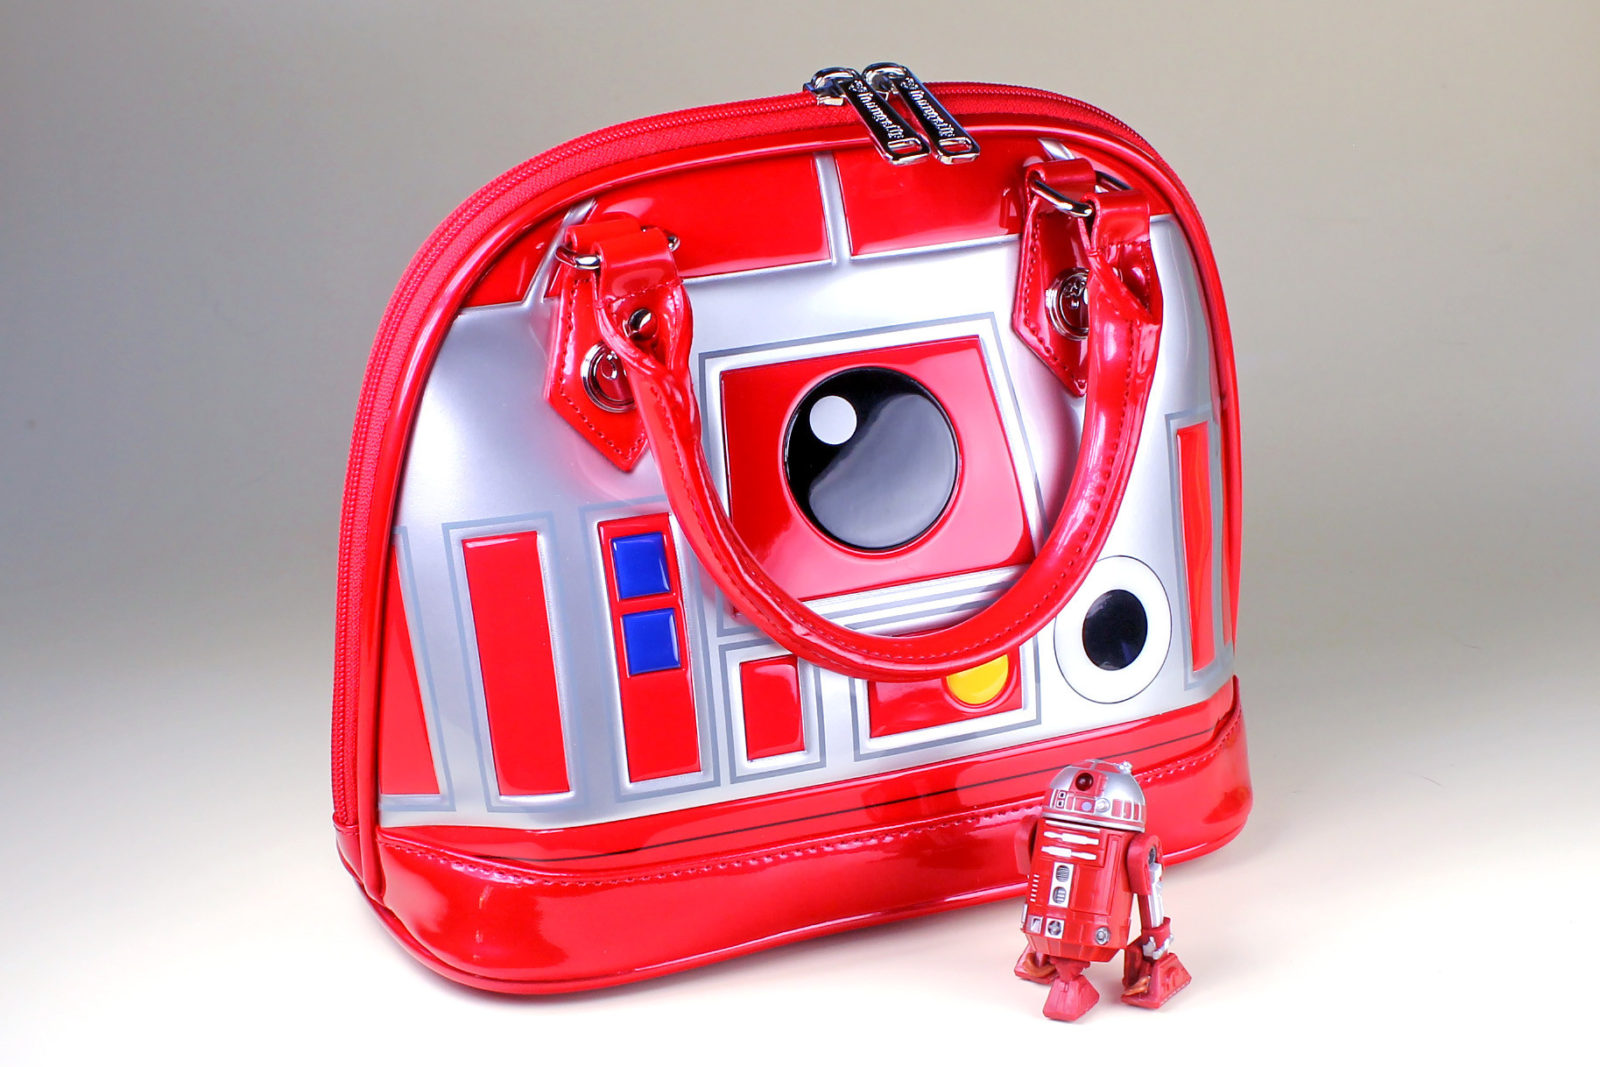 Review – Loungefly R2-R9 dome handbag